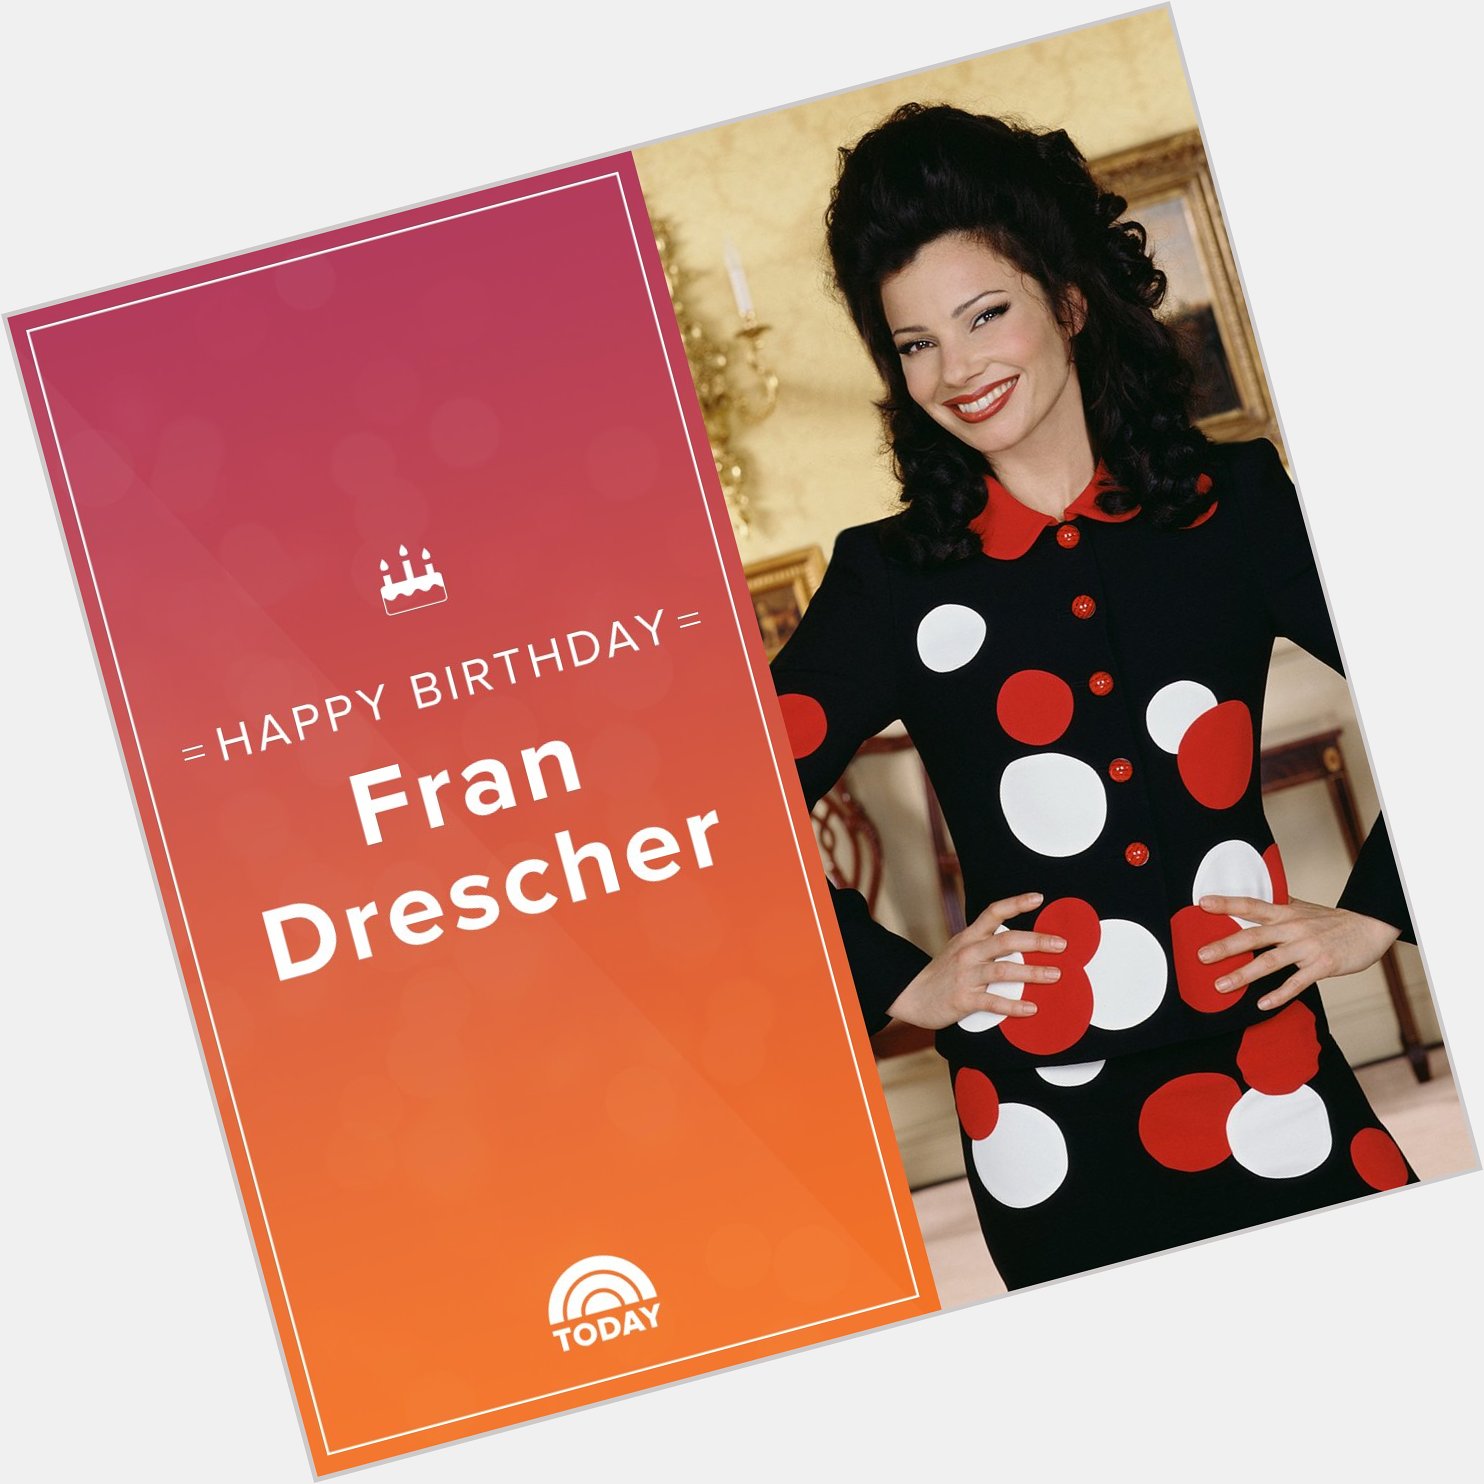 Happy 60th birthday, Fran Drescher!  